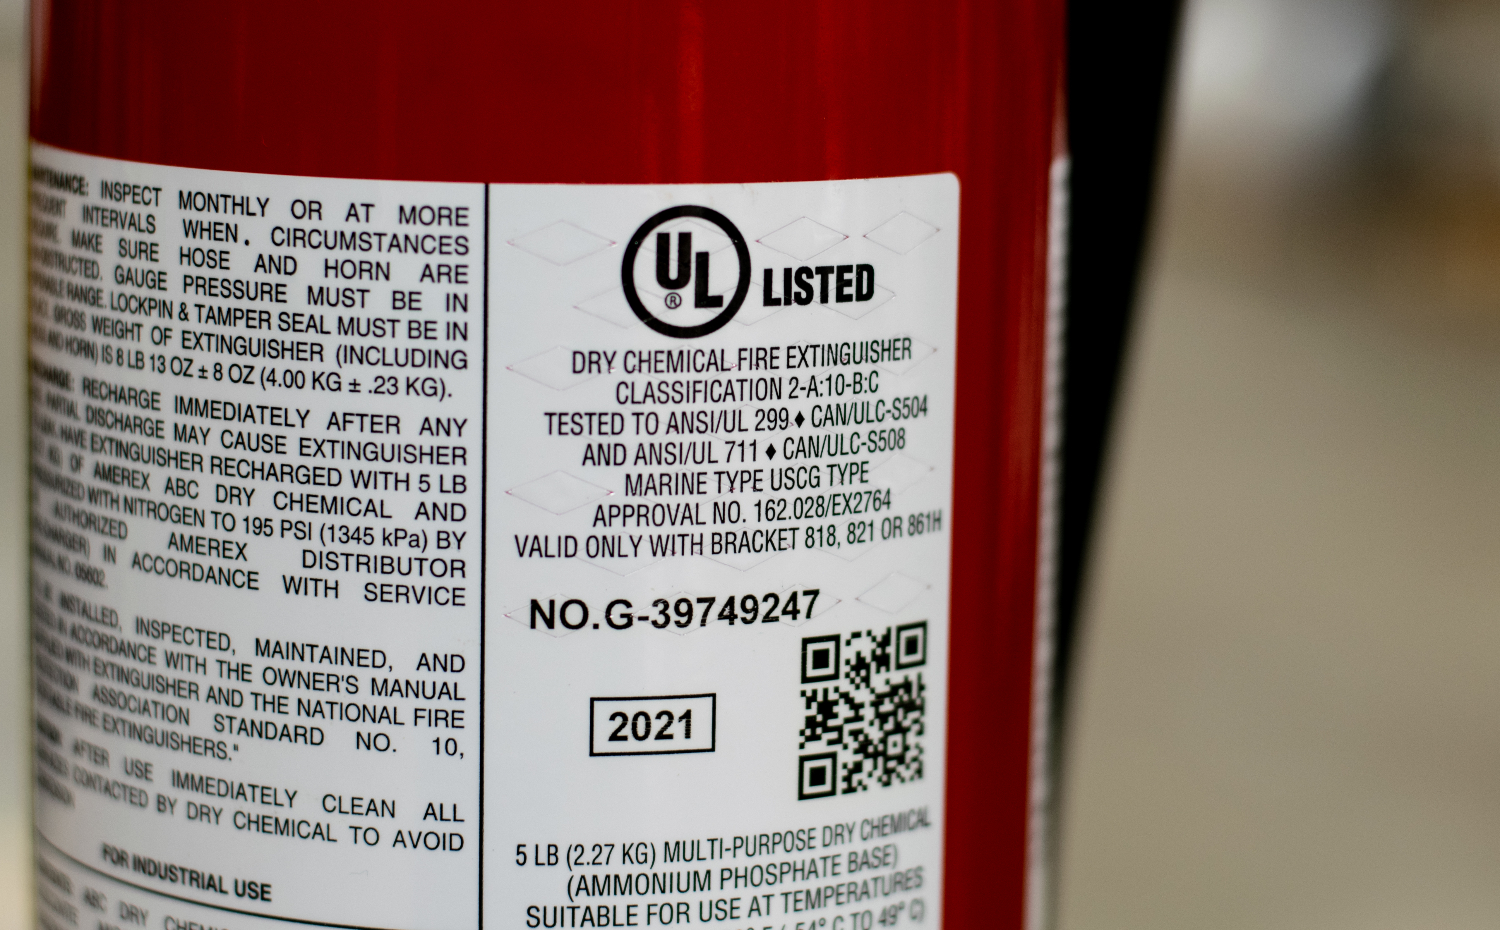 ohio fire sprinkler design certification